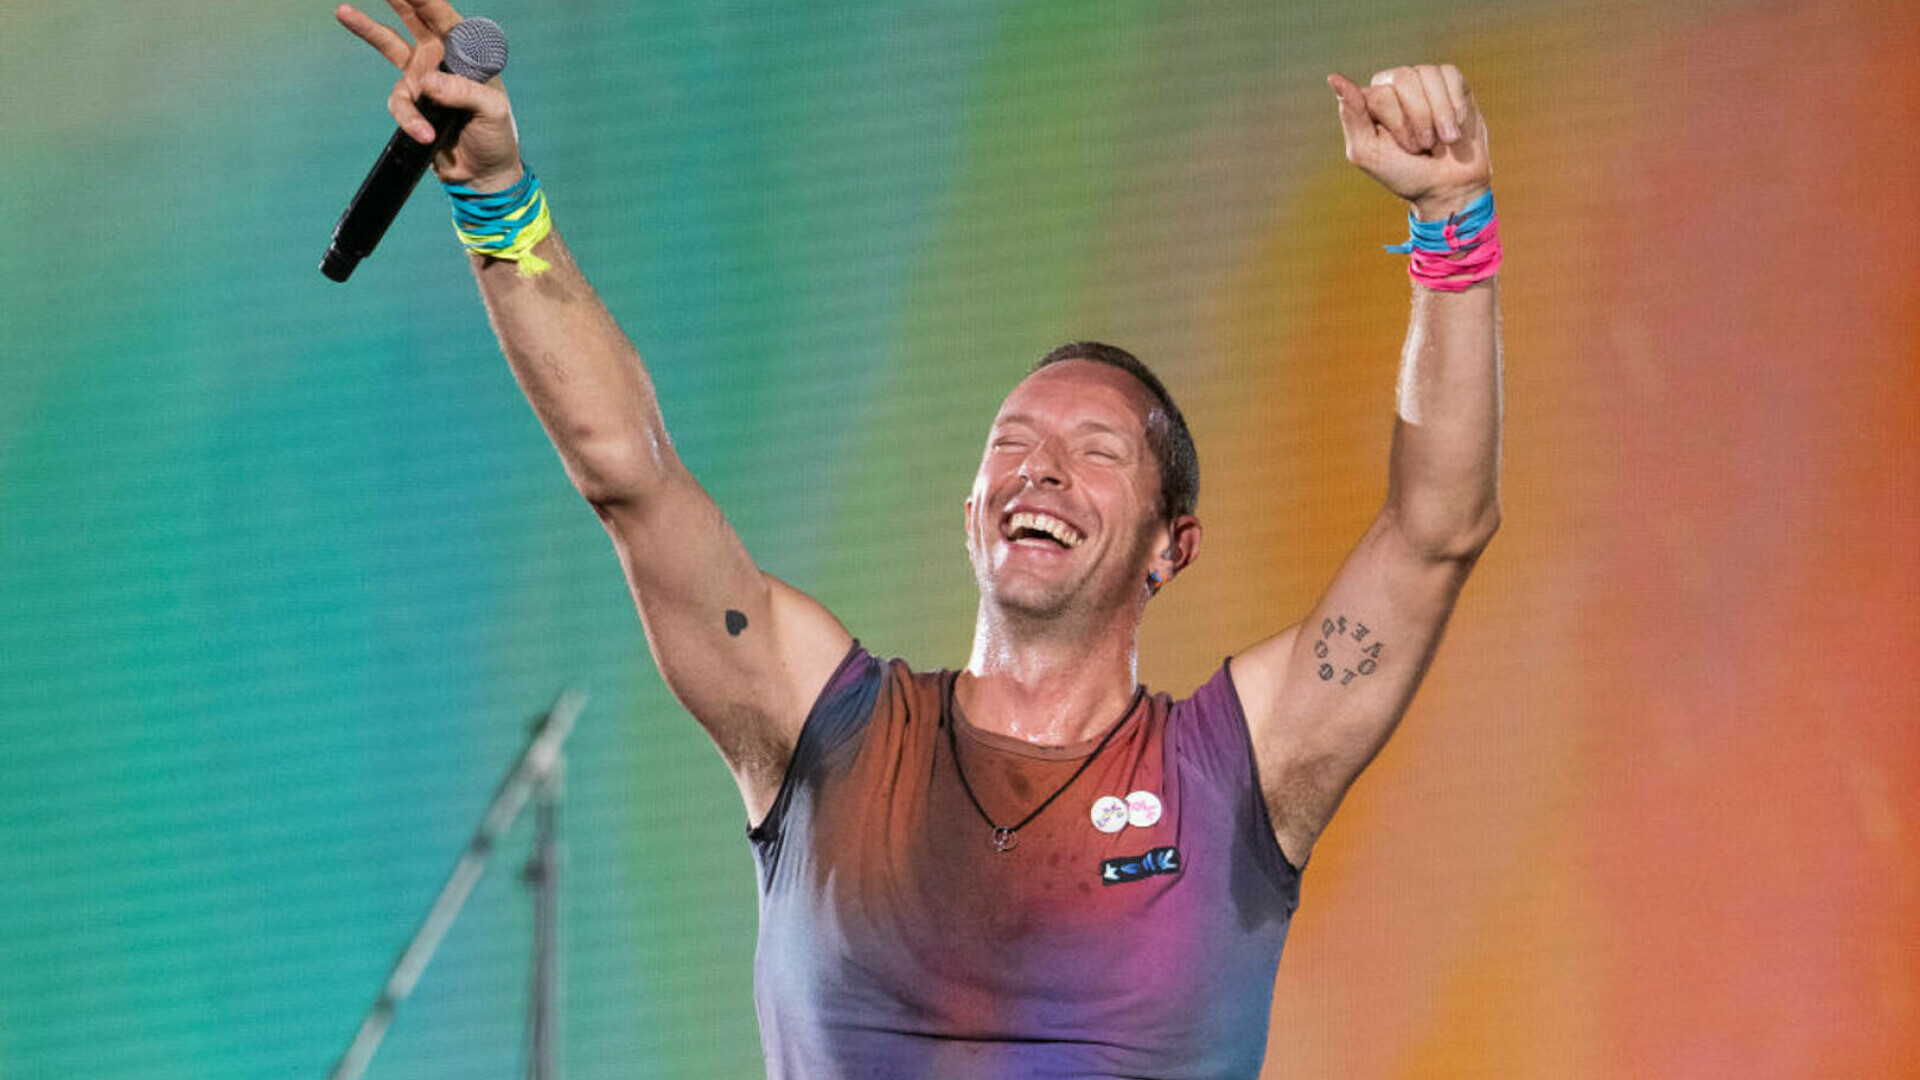 Chris Martin, Coldplay